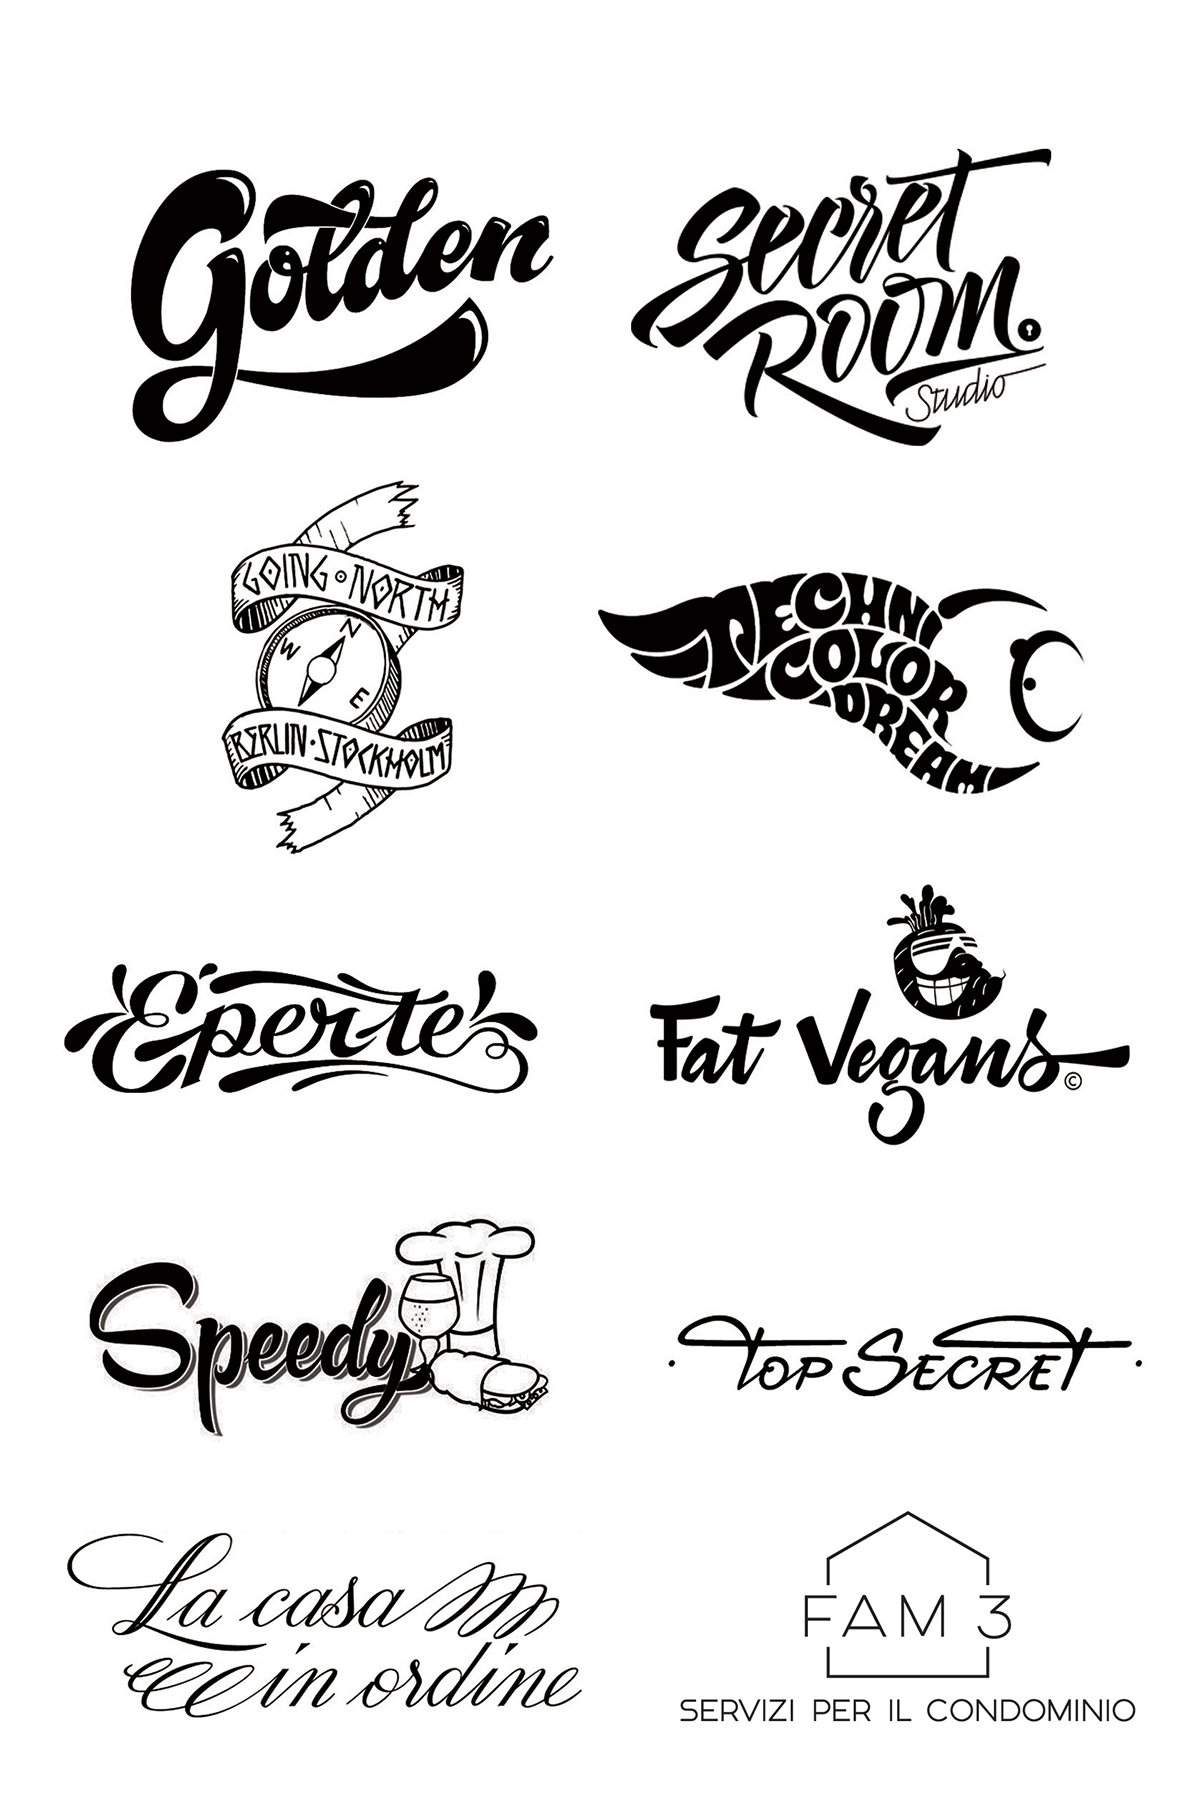 logo logos secret black White draw scketch vintage type lettering room top secret Speedy golden north